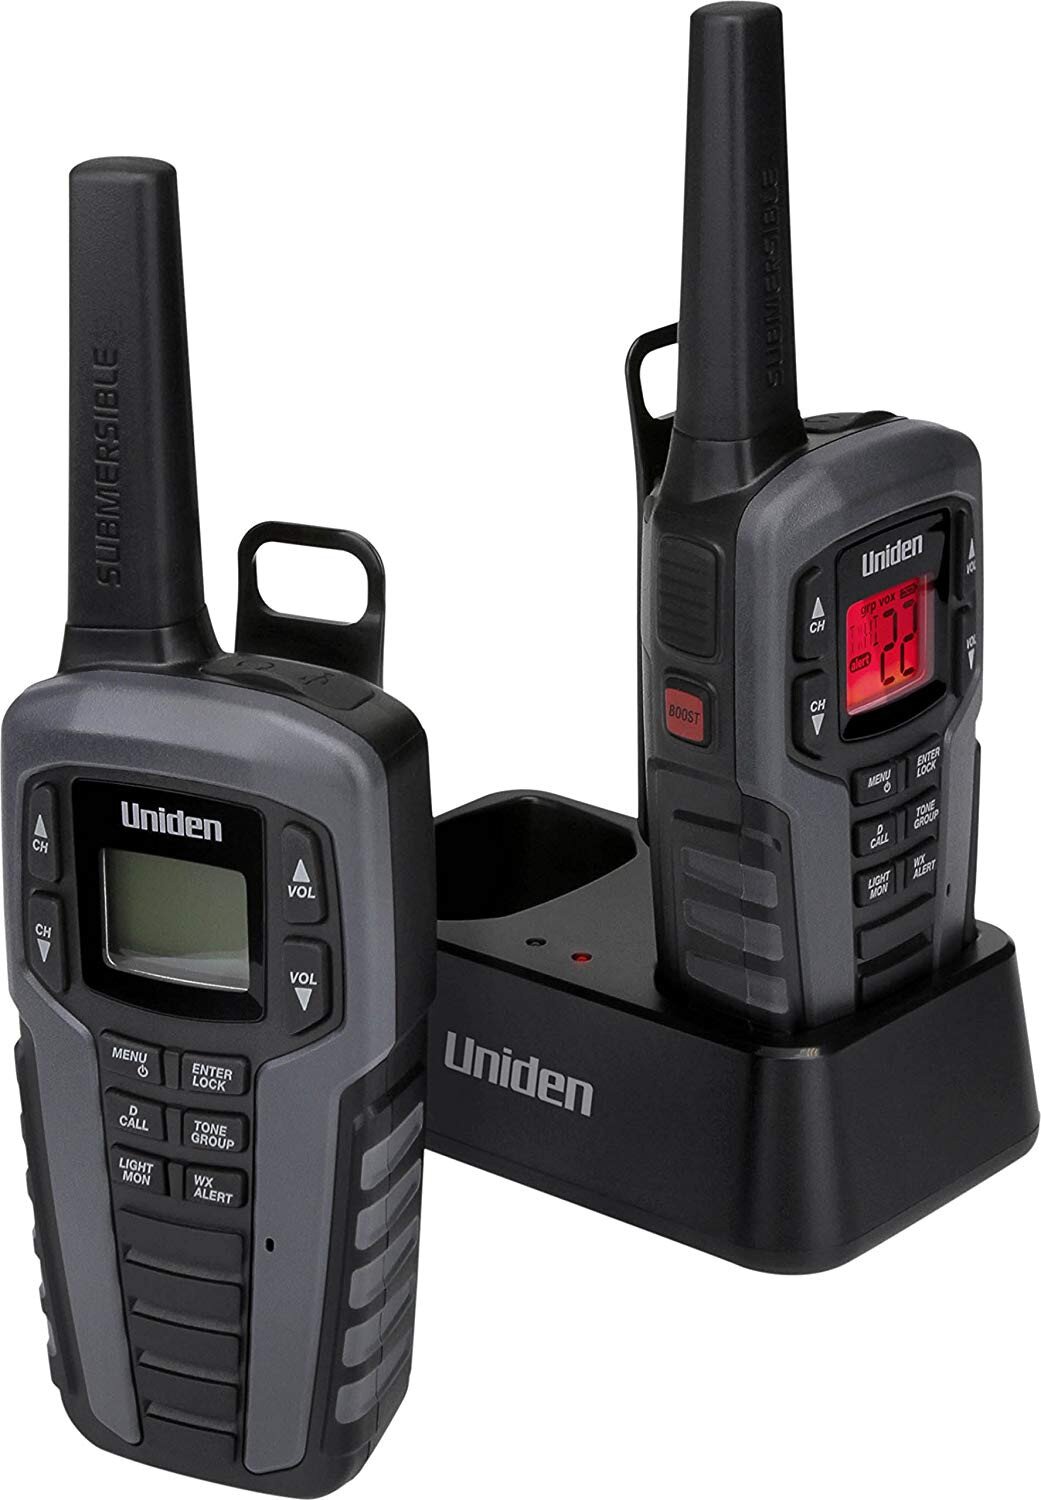 Uniden SX507-2CKHS Up to 50 Mile Range Two-Way Radio Walkie Talkies W Dual Charging Cradle, Waterproof, Floats, 22 Channels, 142 Privacy Codes, NOAA W - 5